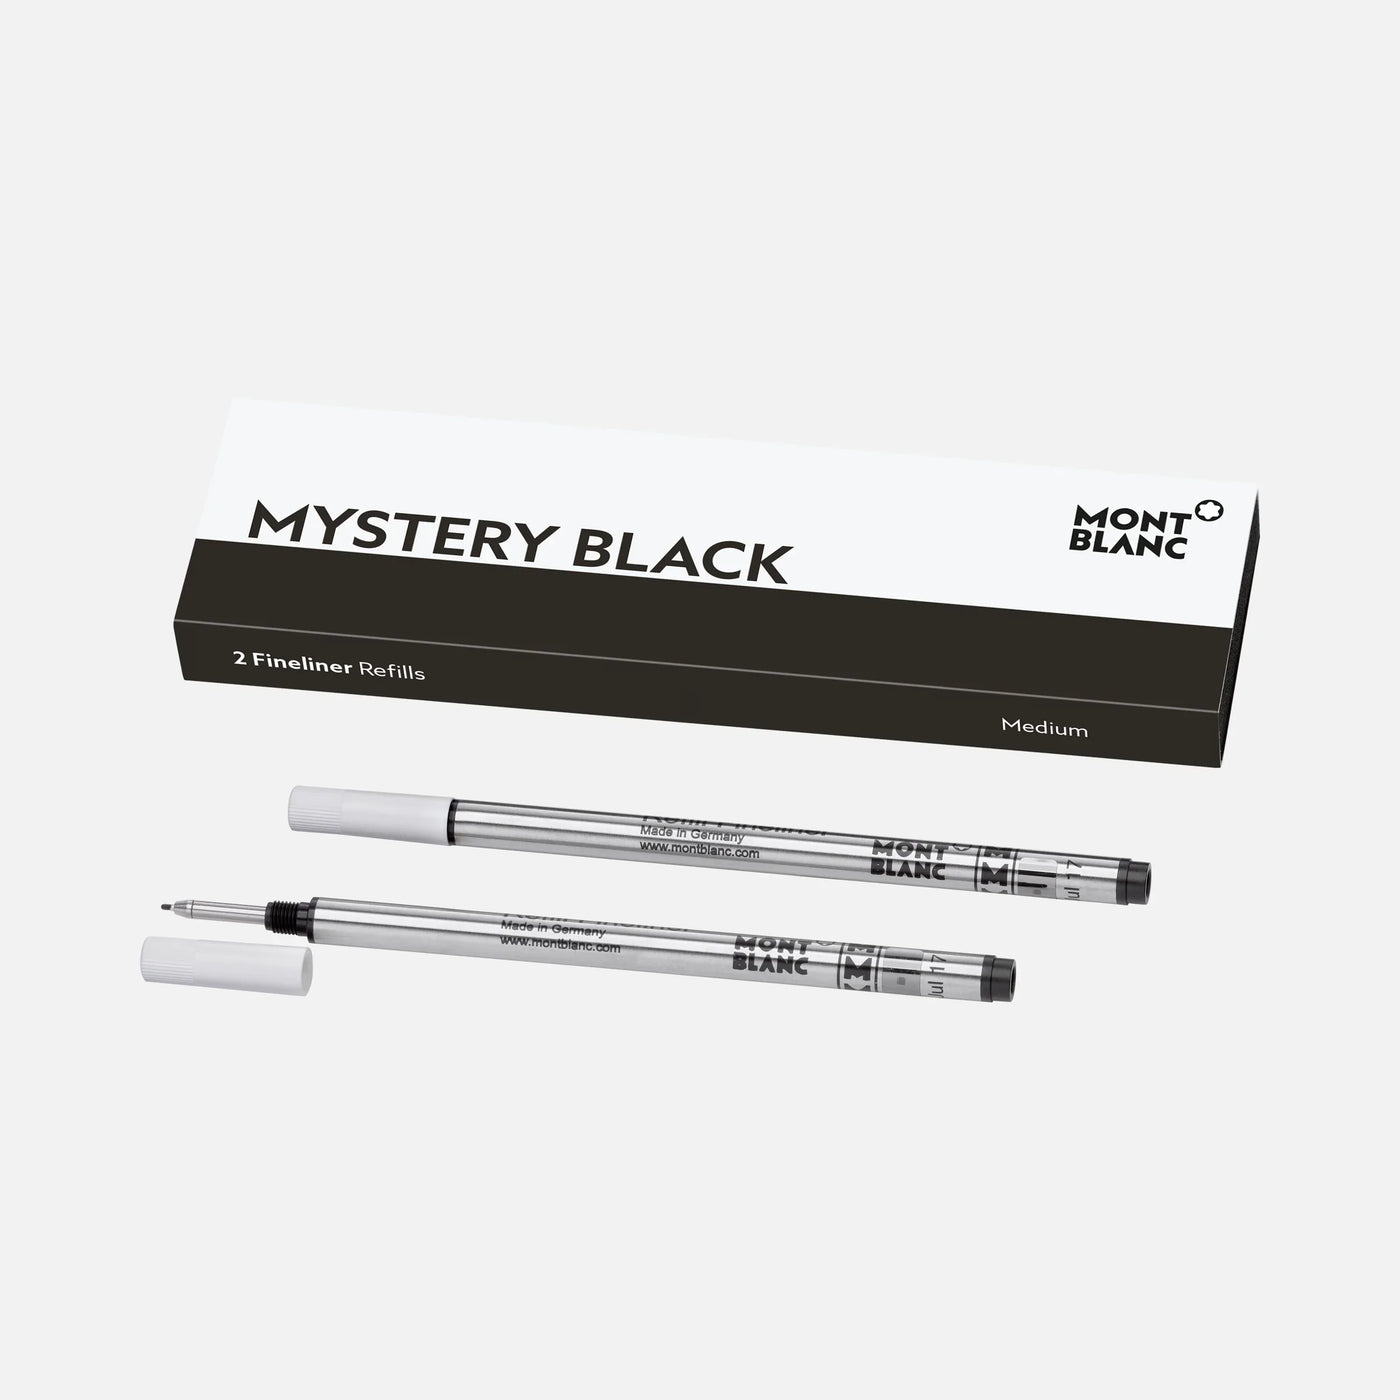 Montblanc Mystery Black 2 Fineliner Refills - Medium